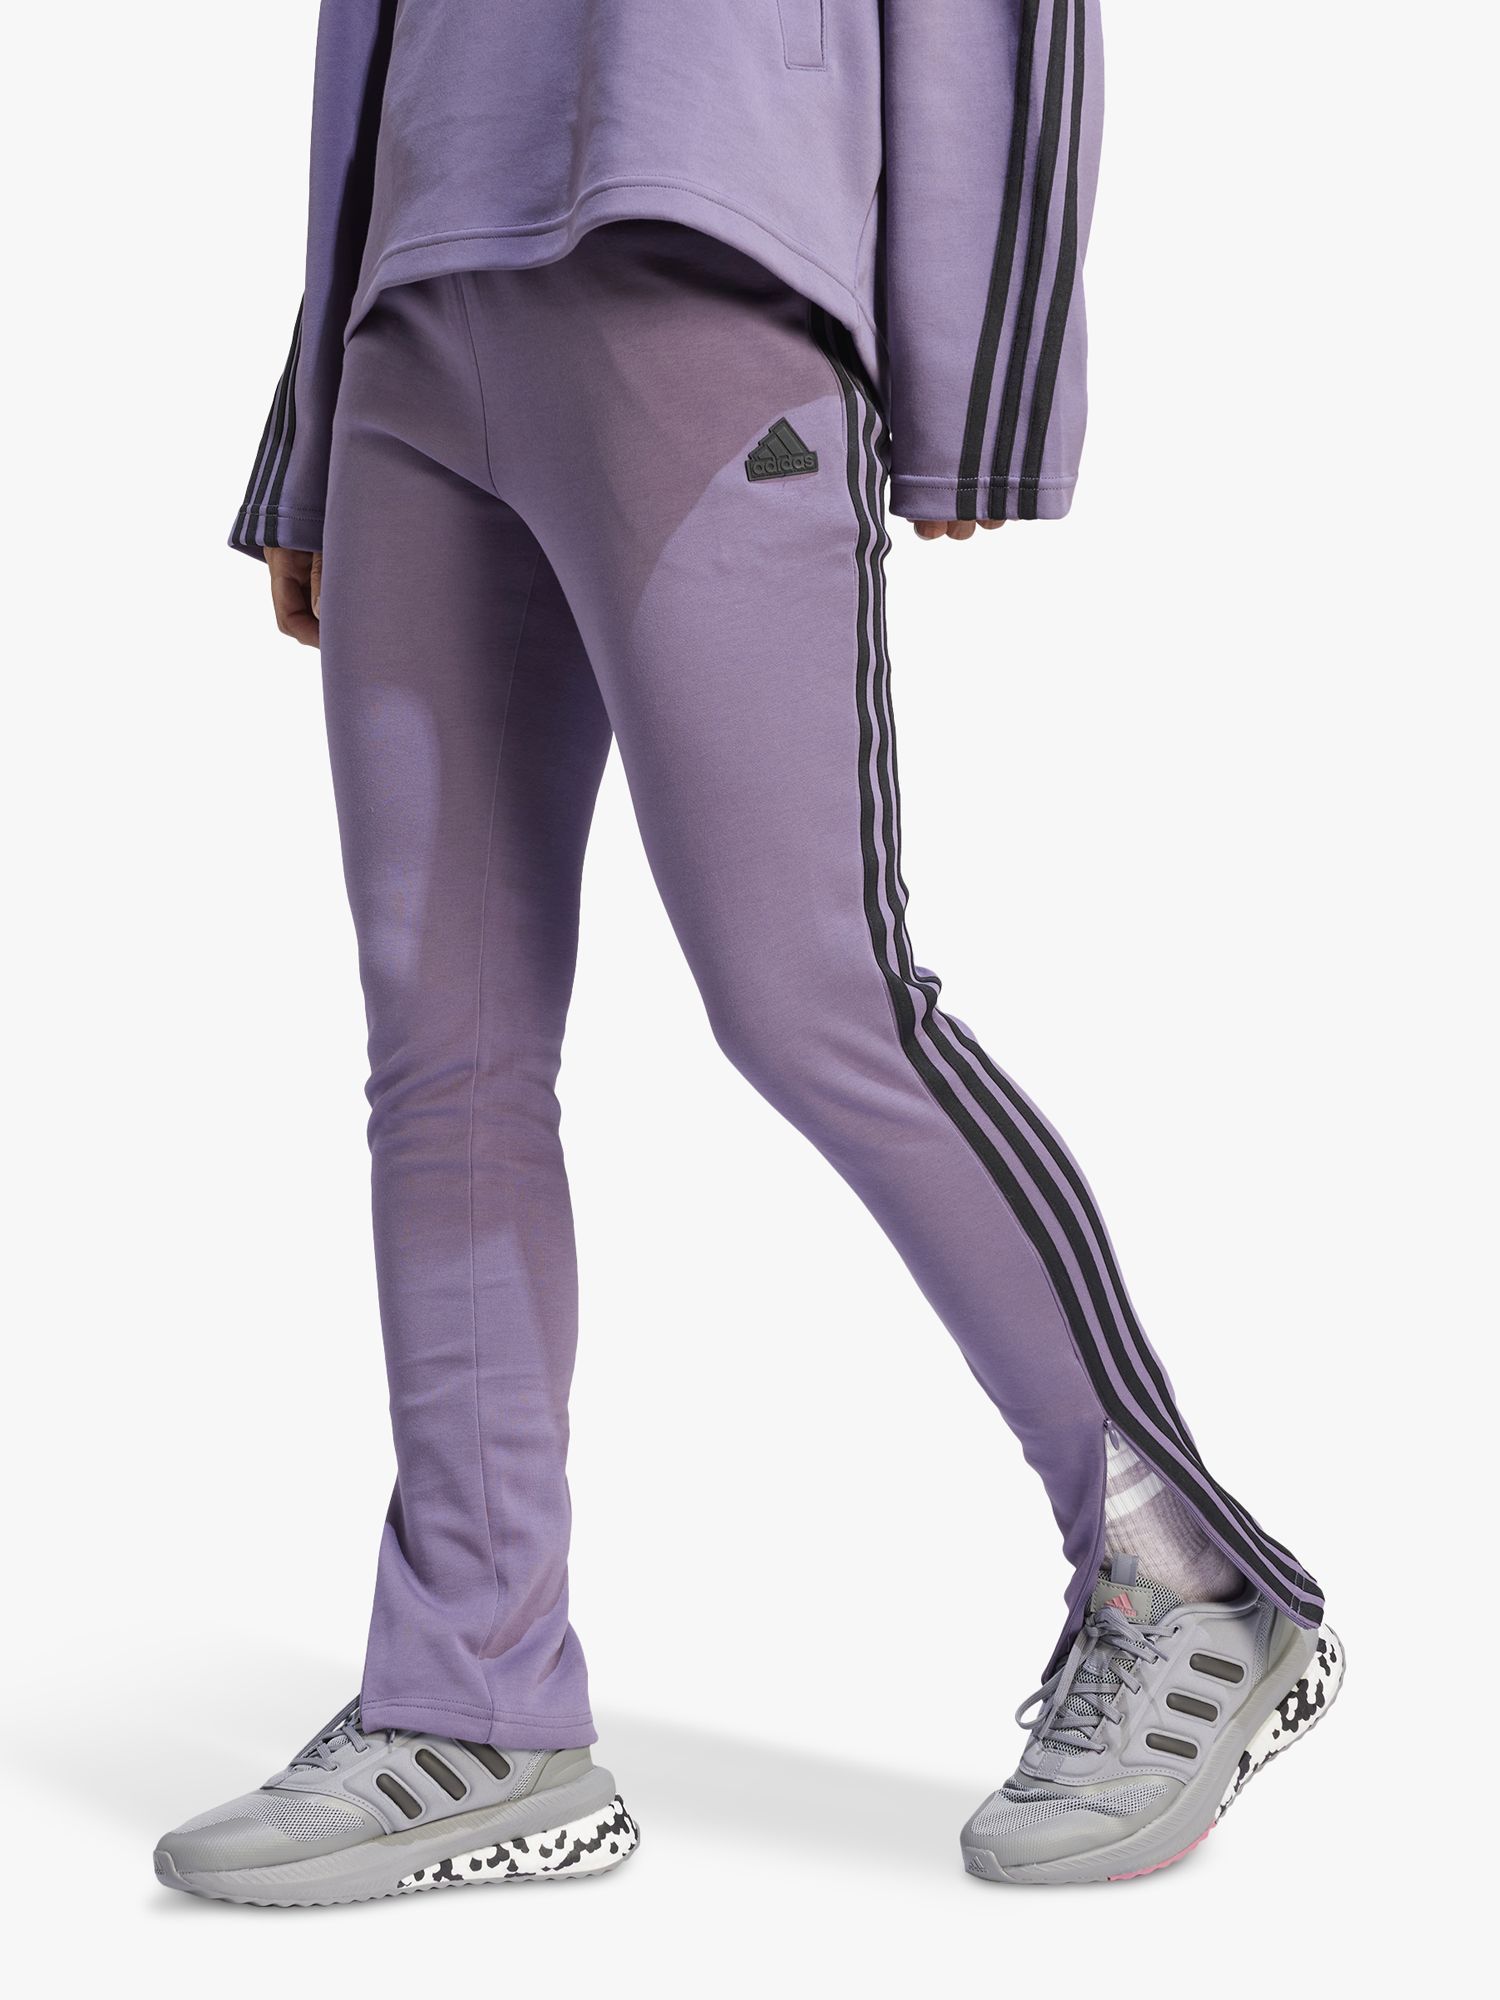 Adidas Women's Linear Leggings (Dark Grey Heather/Rose Tone, Size